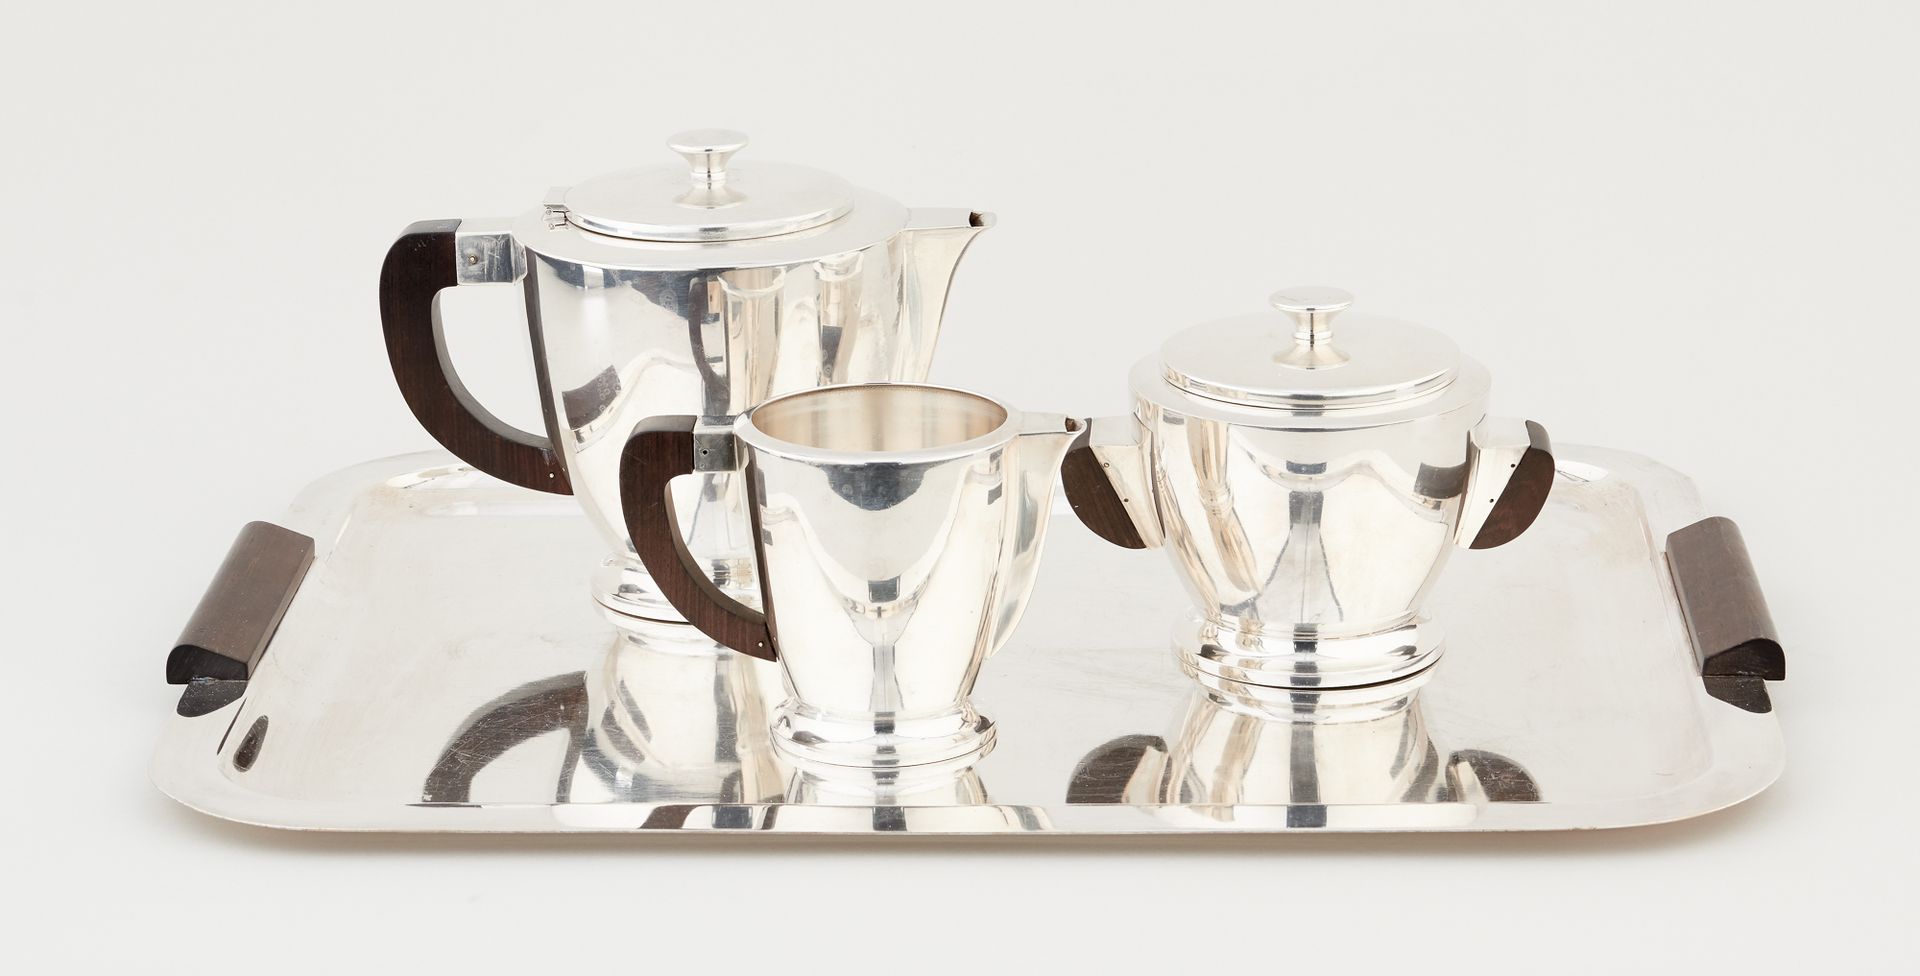 Gersyl, d'époque Art déco. Silverware: Silver plated tea set, consisting of a te&hellip;